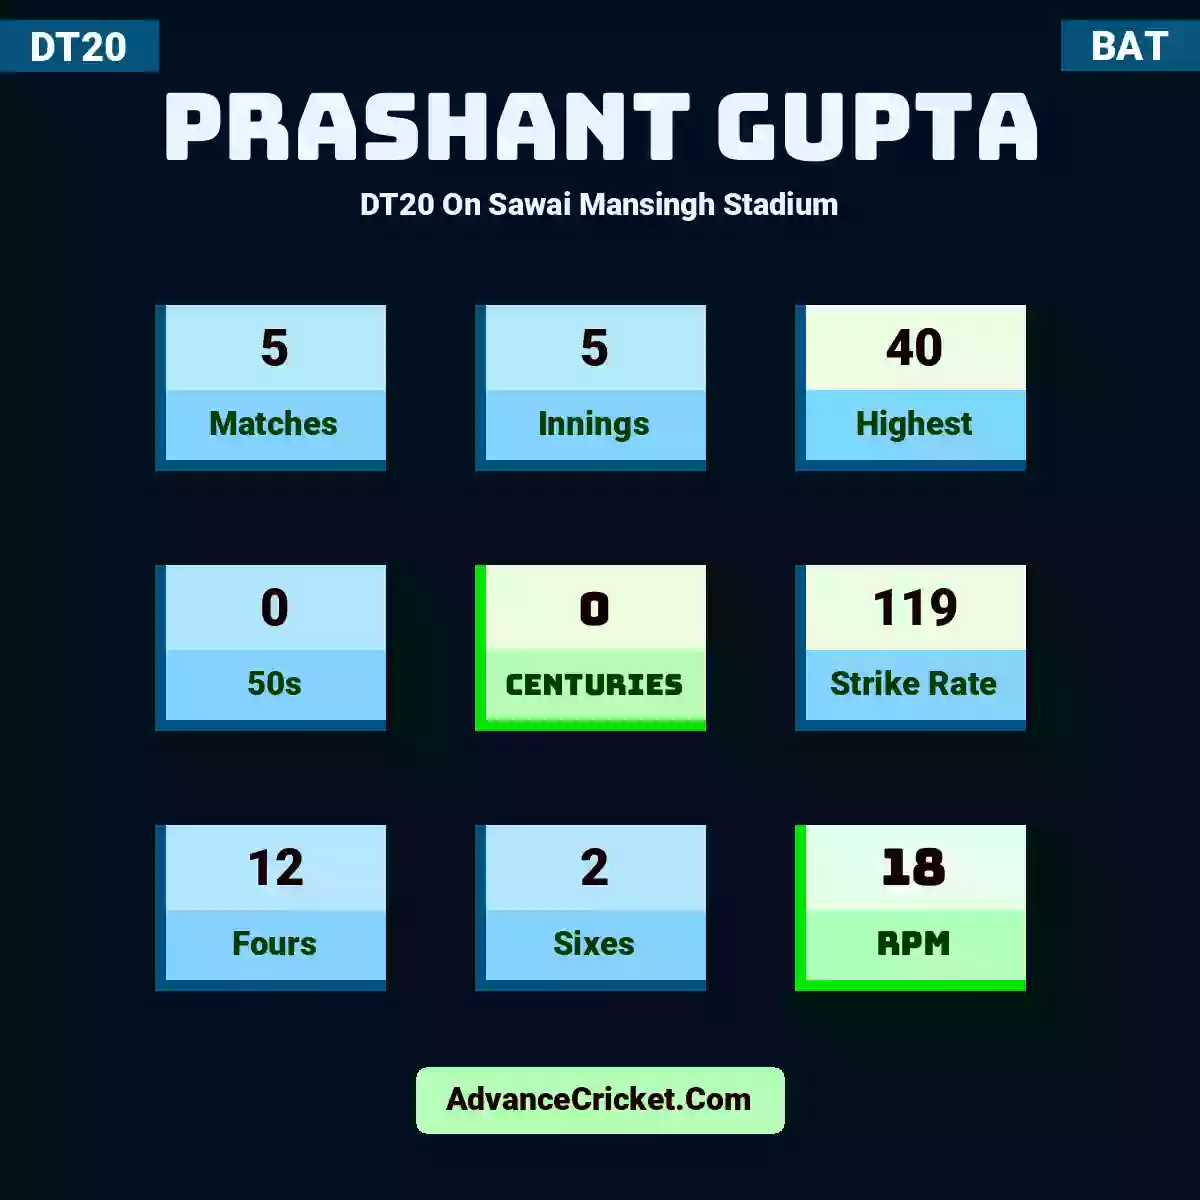 Prashant Gupta DT20  On Sawai Mansingh Stadium, Prashant Gupta played 5 matches, scored 40 runs as highest, 0 half-centuries, and 0 centuries, with a strike rate of 119. P.Gupta hit 12 fours and 2 sixes, with an RPM of 18.